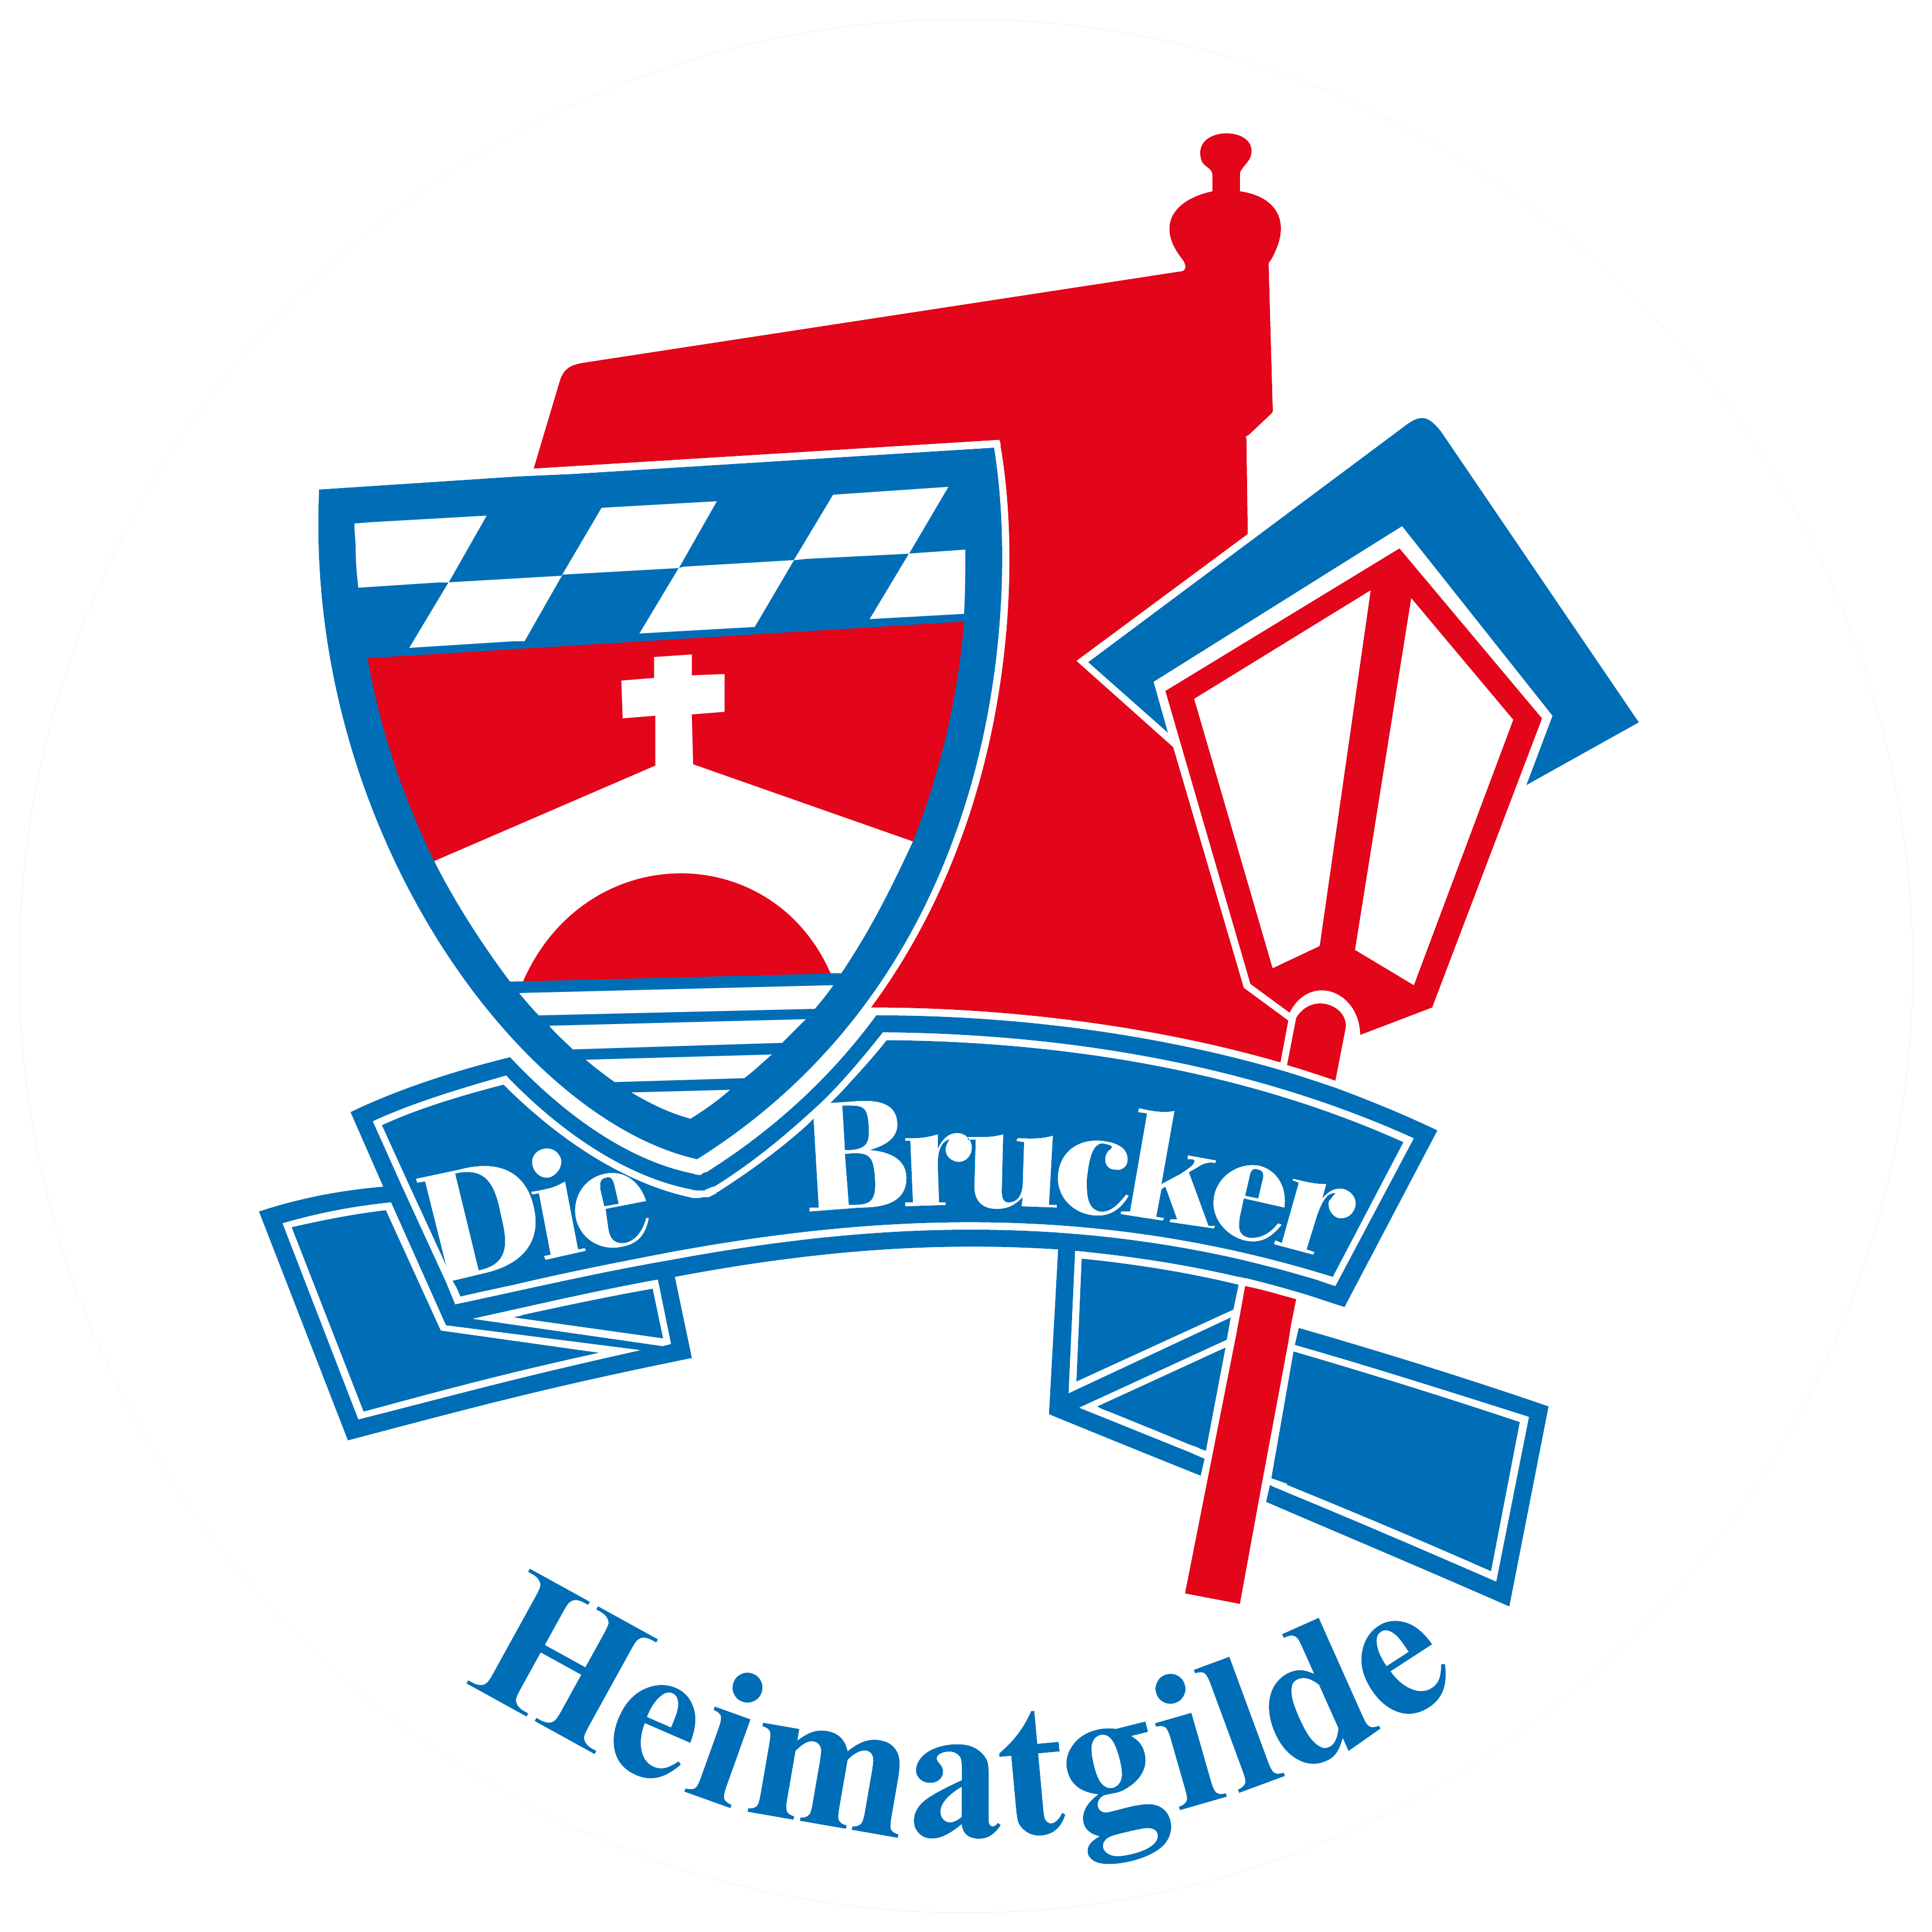 "Die Brucker" Heimatgilde